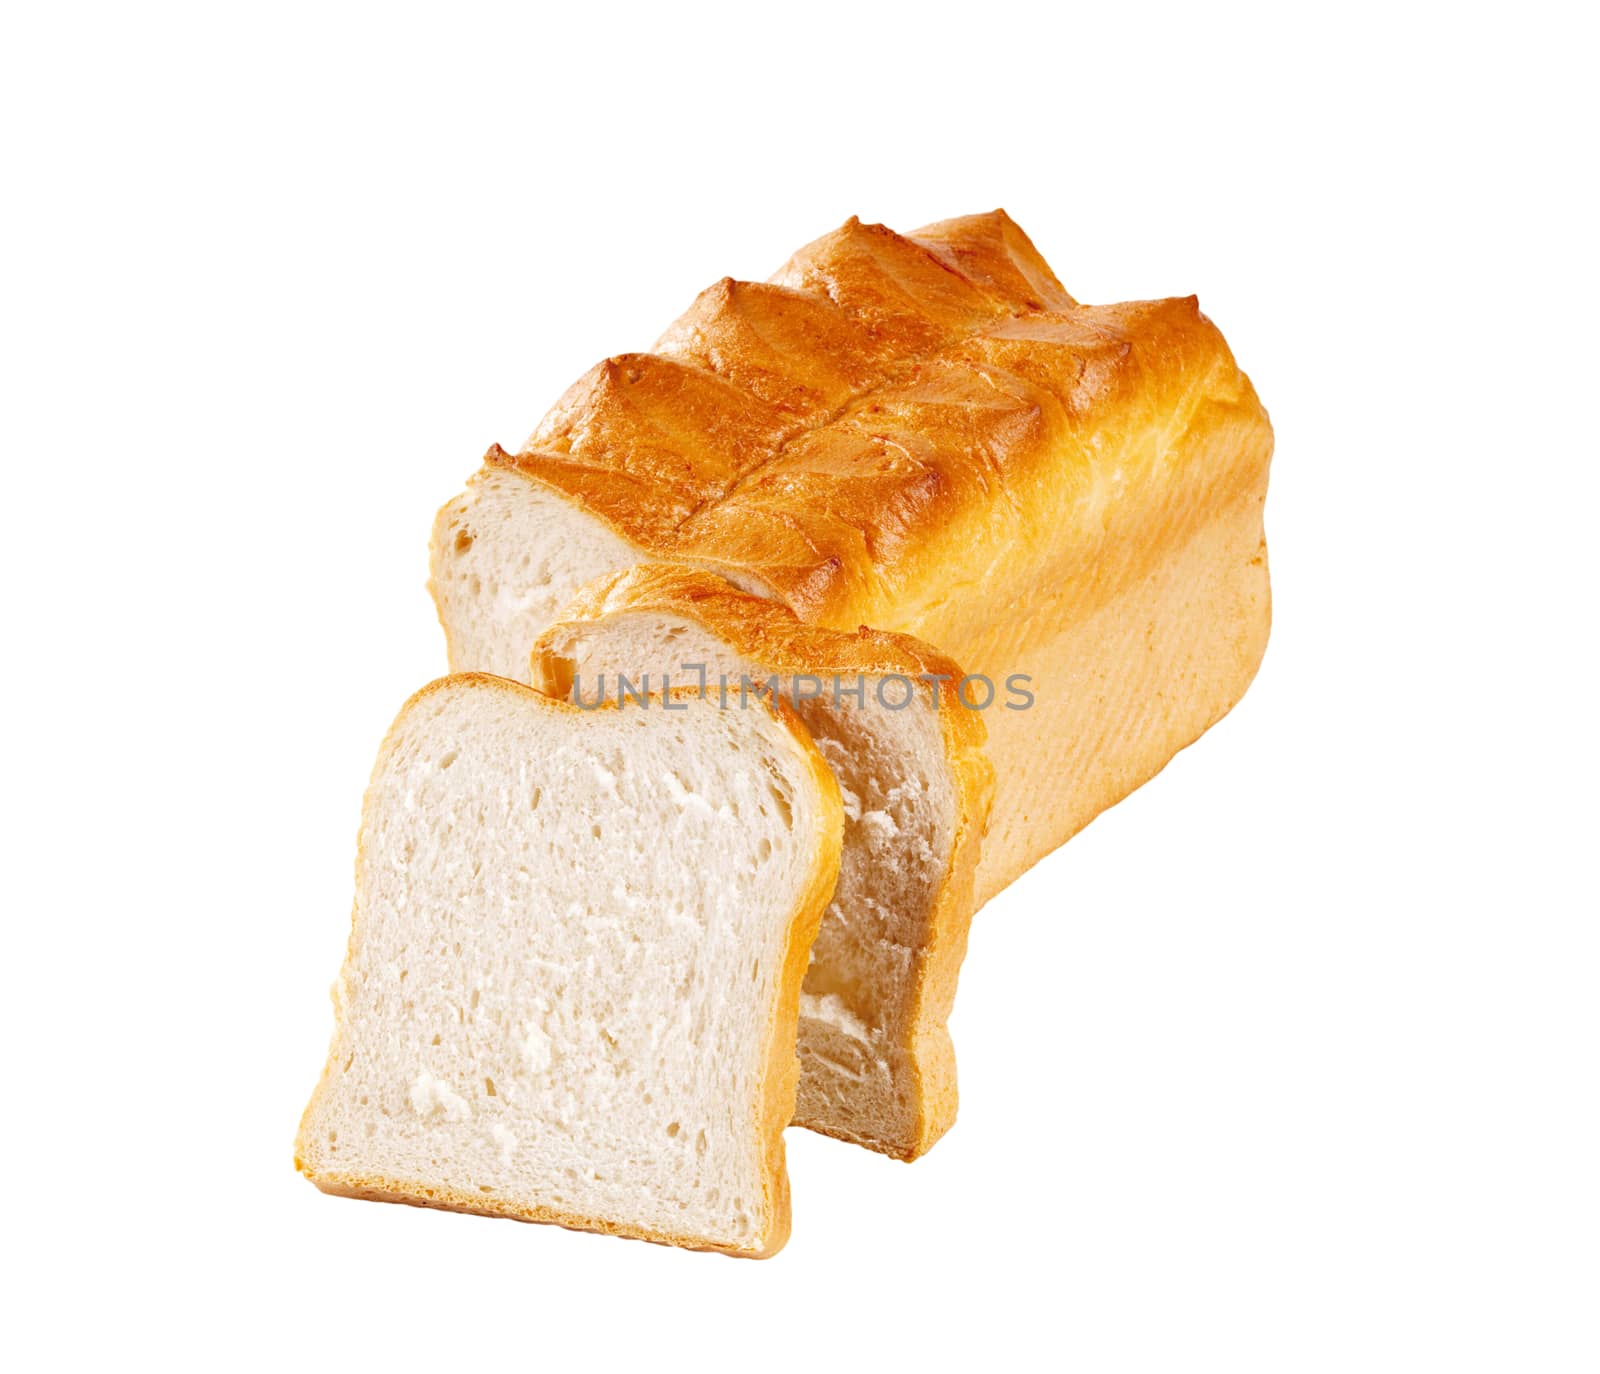 White bread by Digifoodstock